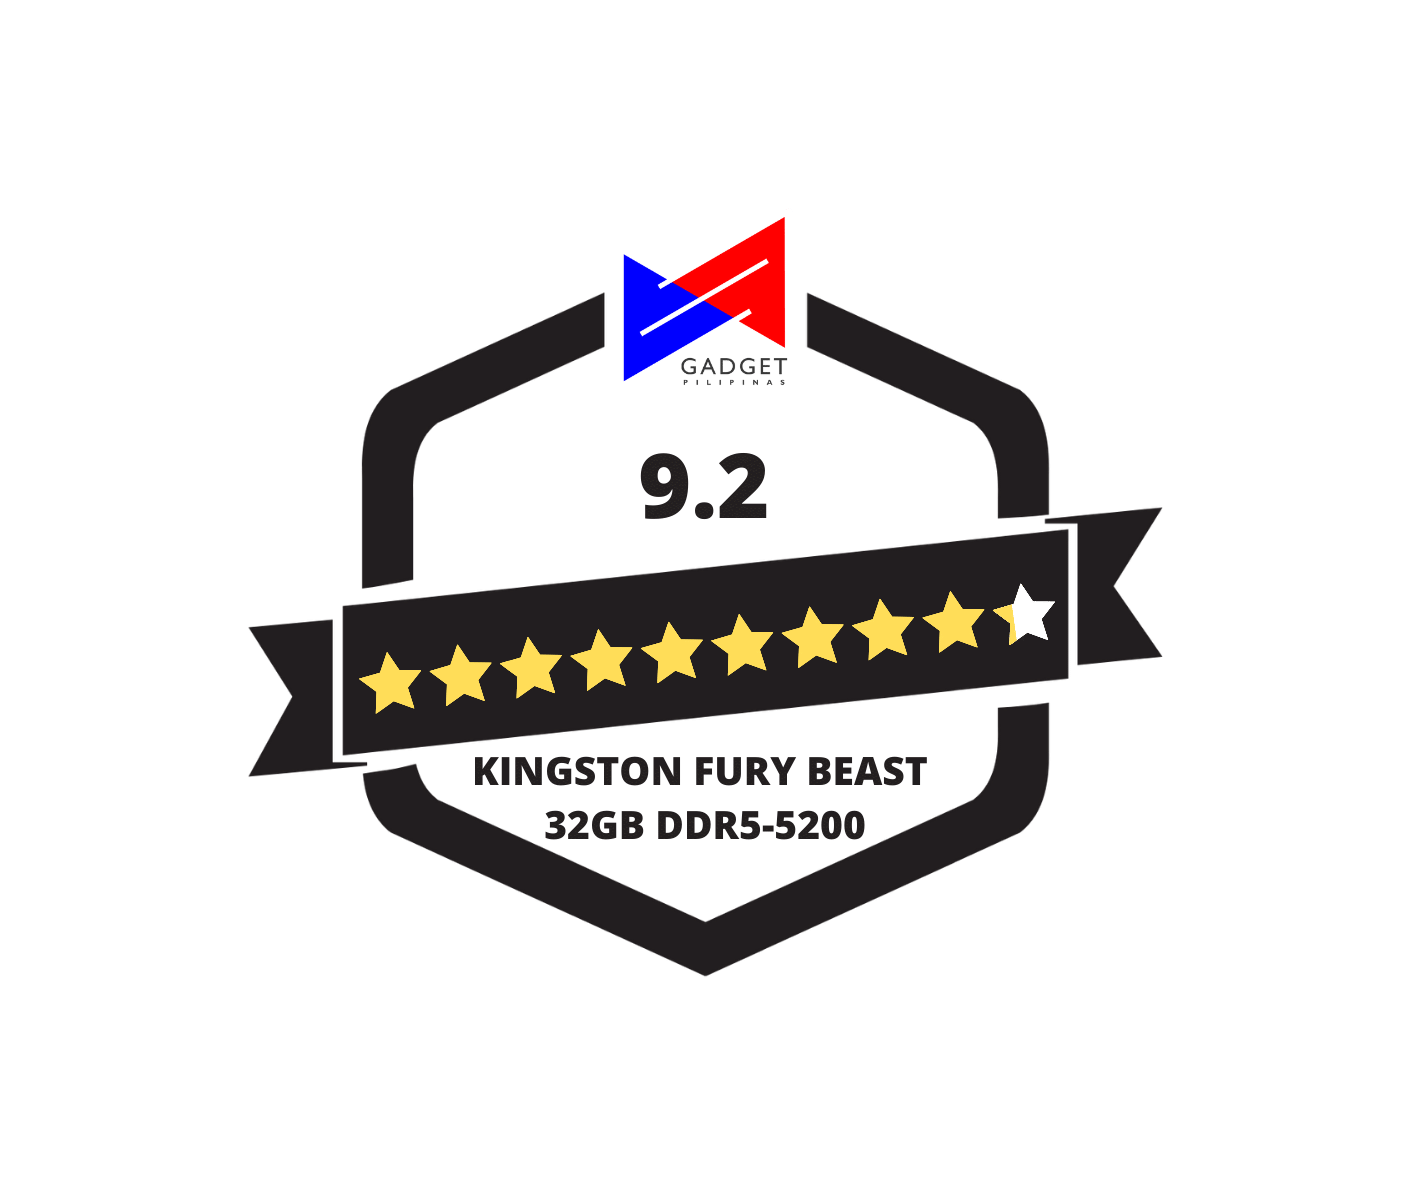 Kingston Fury Beast 32GB DDR5 5200Mhz Review PH - Kingston Fury Beast DDR5 32GB Review Philippines Price